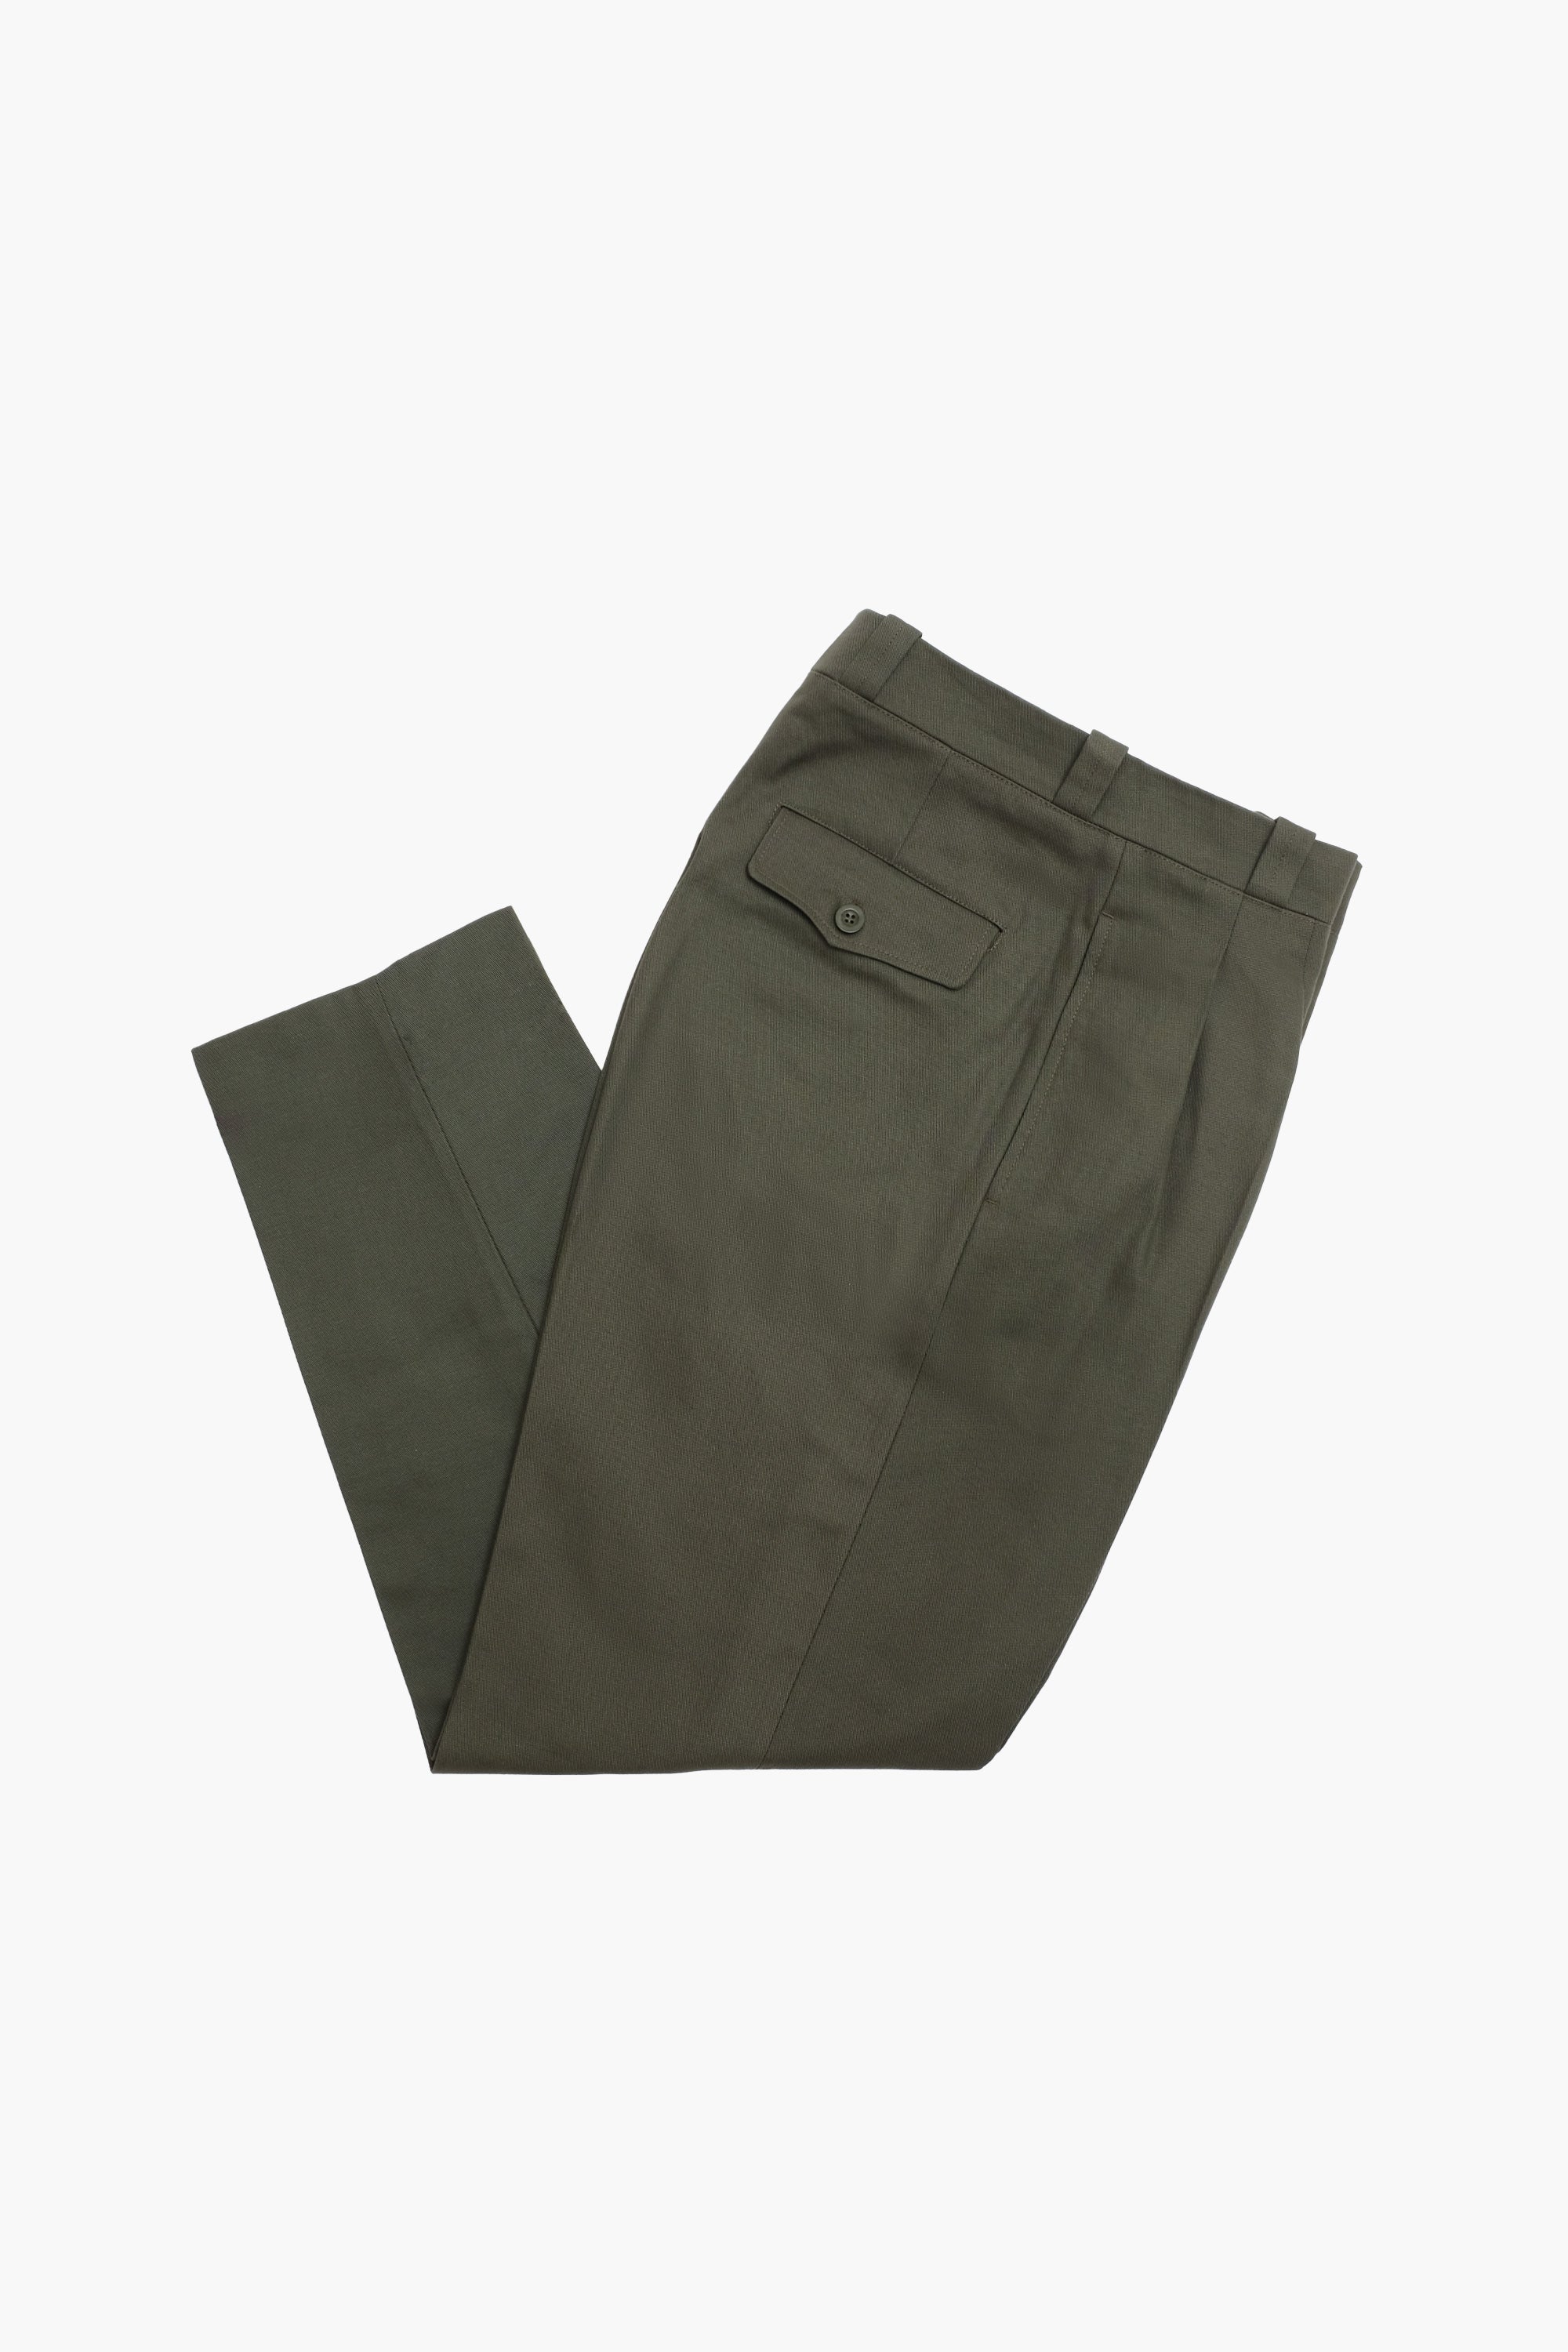 Military Black Cargo Pants Men Cotton Trousers Baggy Camouflage Tactical  Pants | eBay